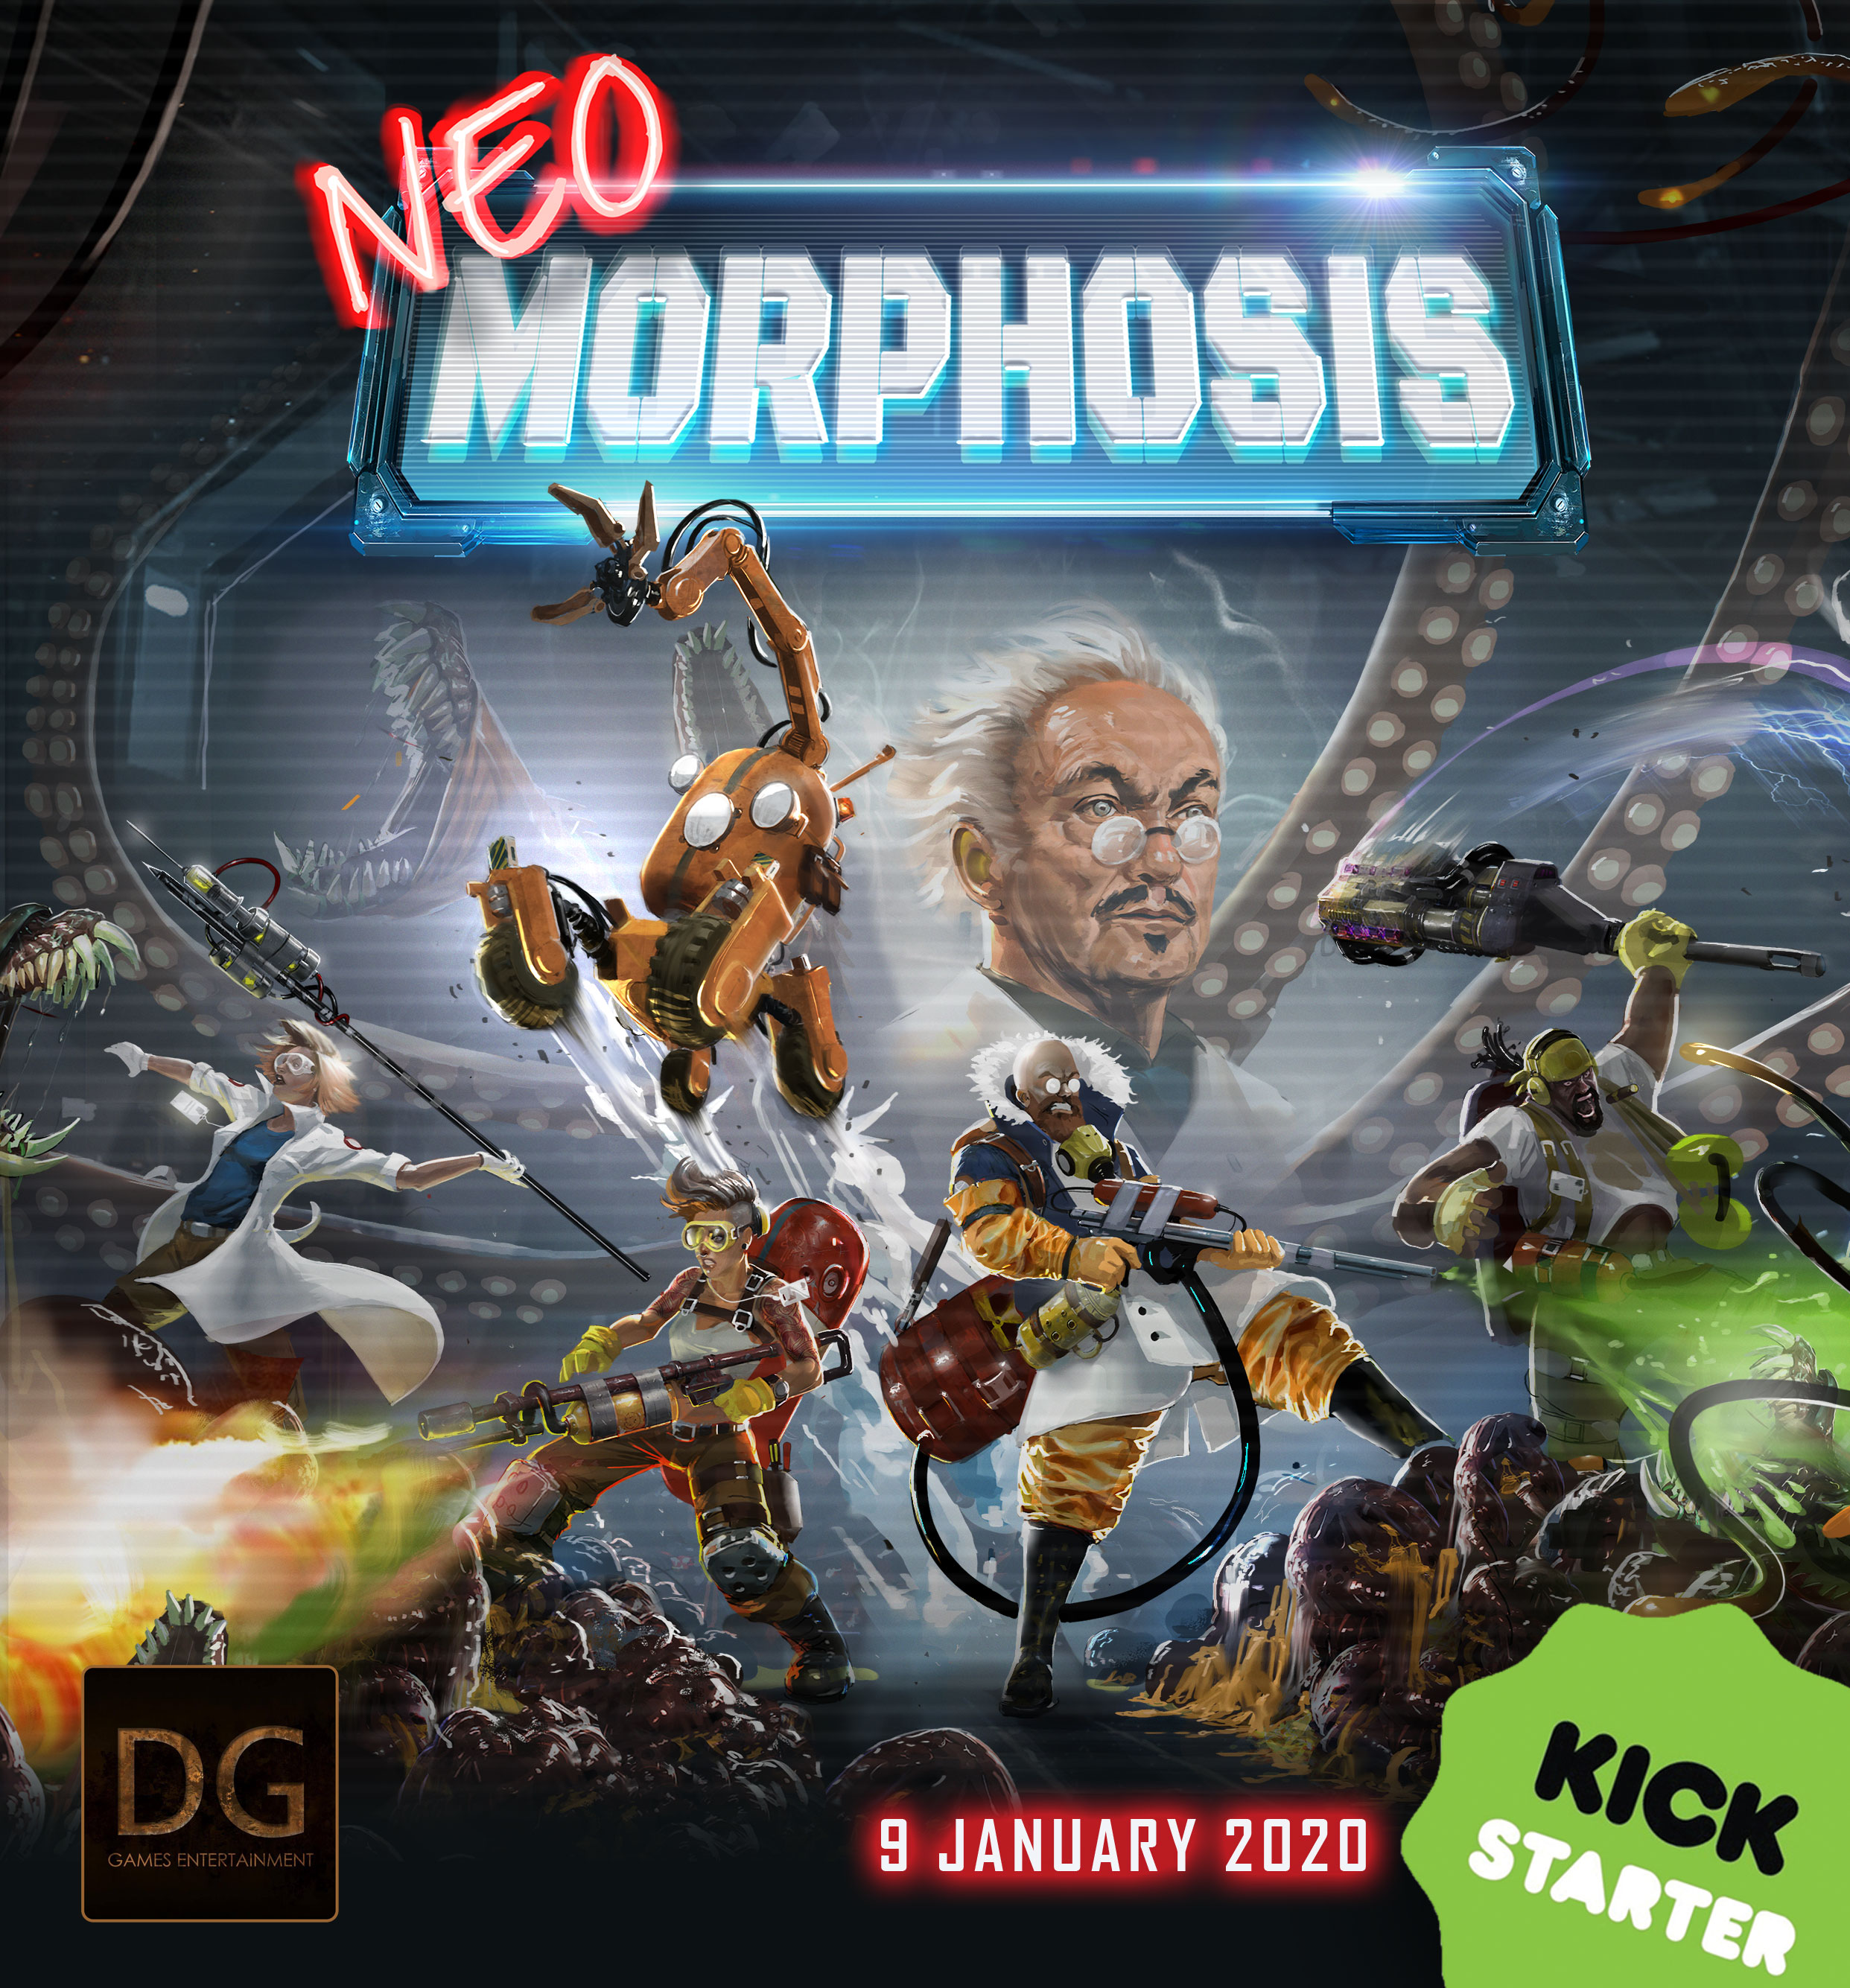 Neo-Morphosis launches on Kickstarter 9th January 2020